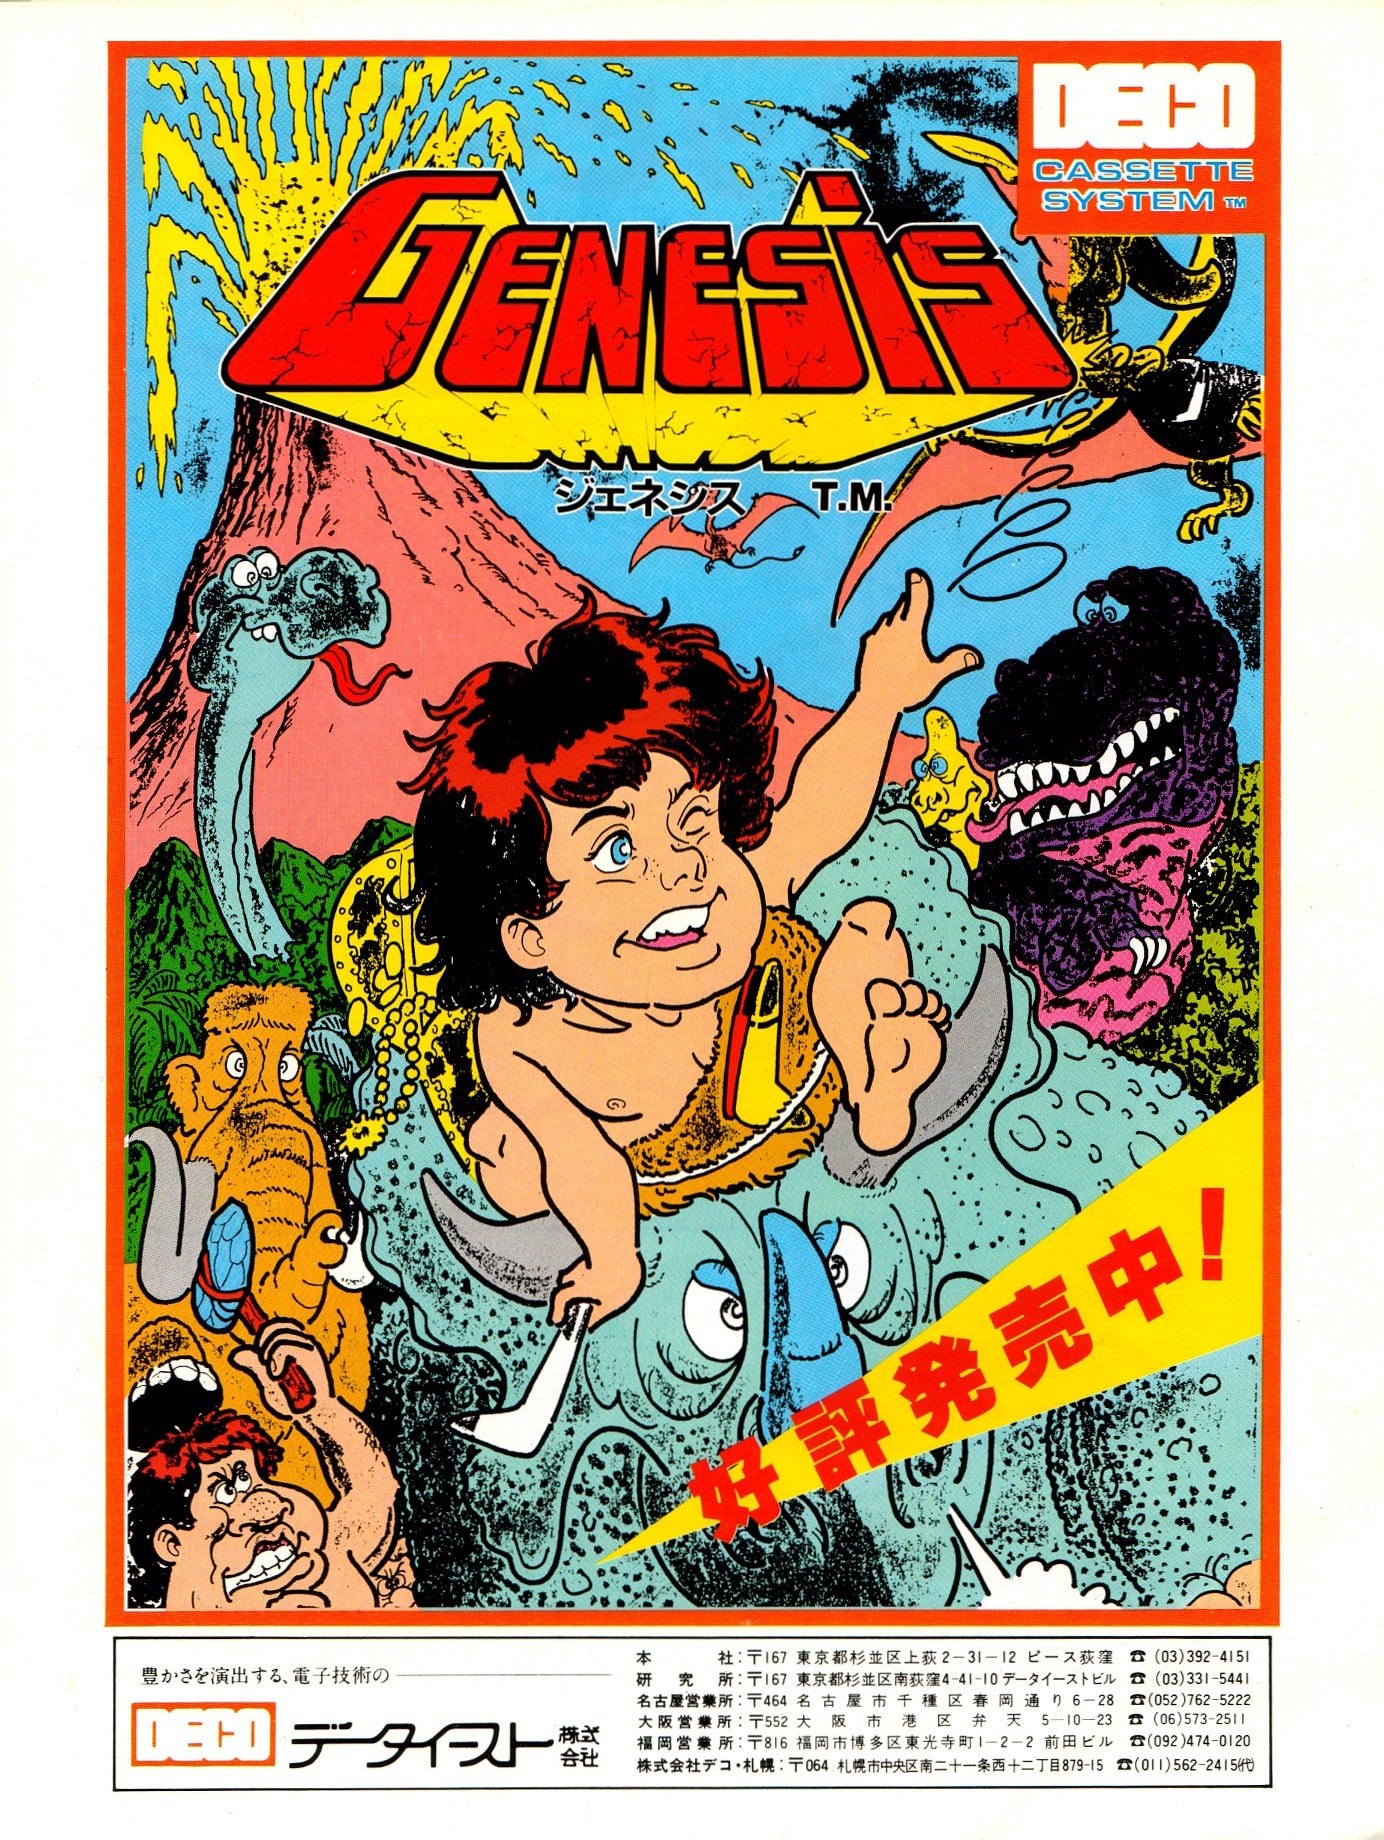 Boomer Rang'r (Genesis) (Japan)